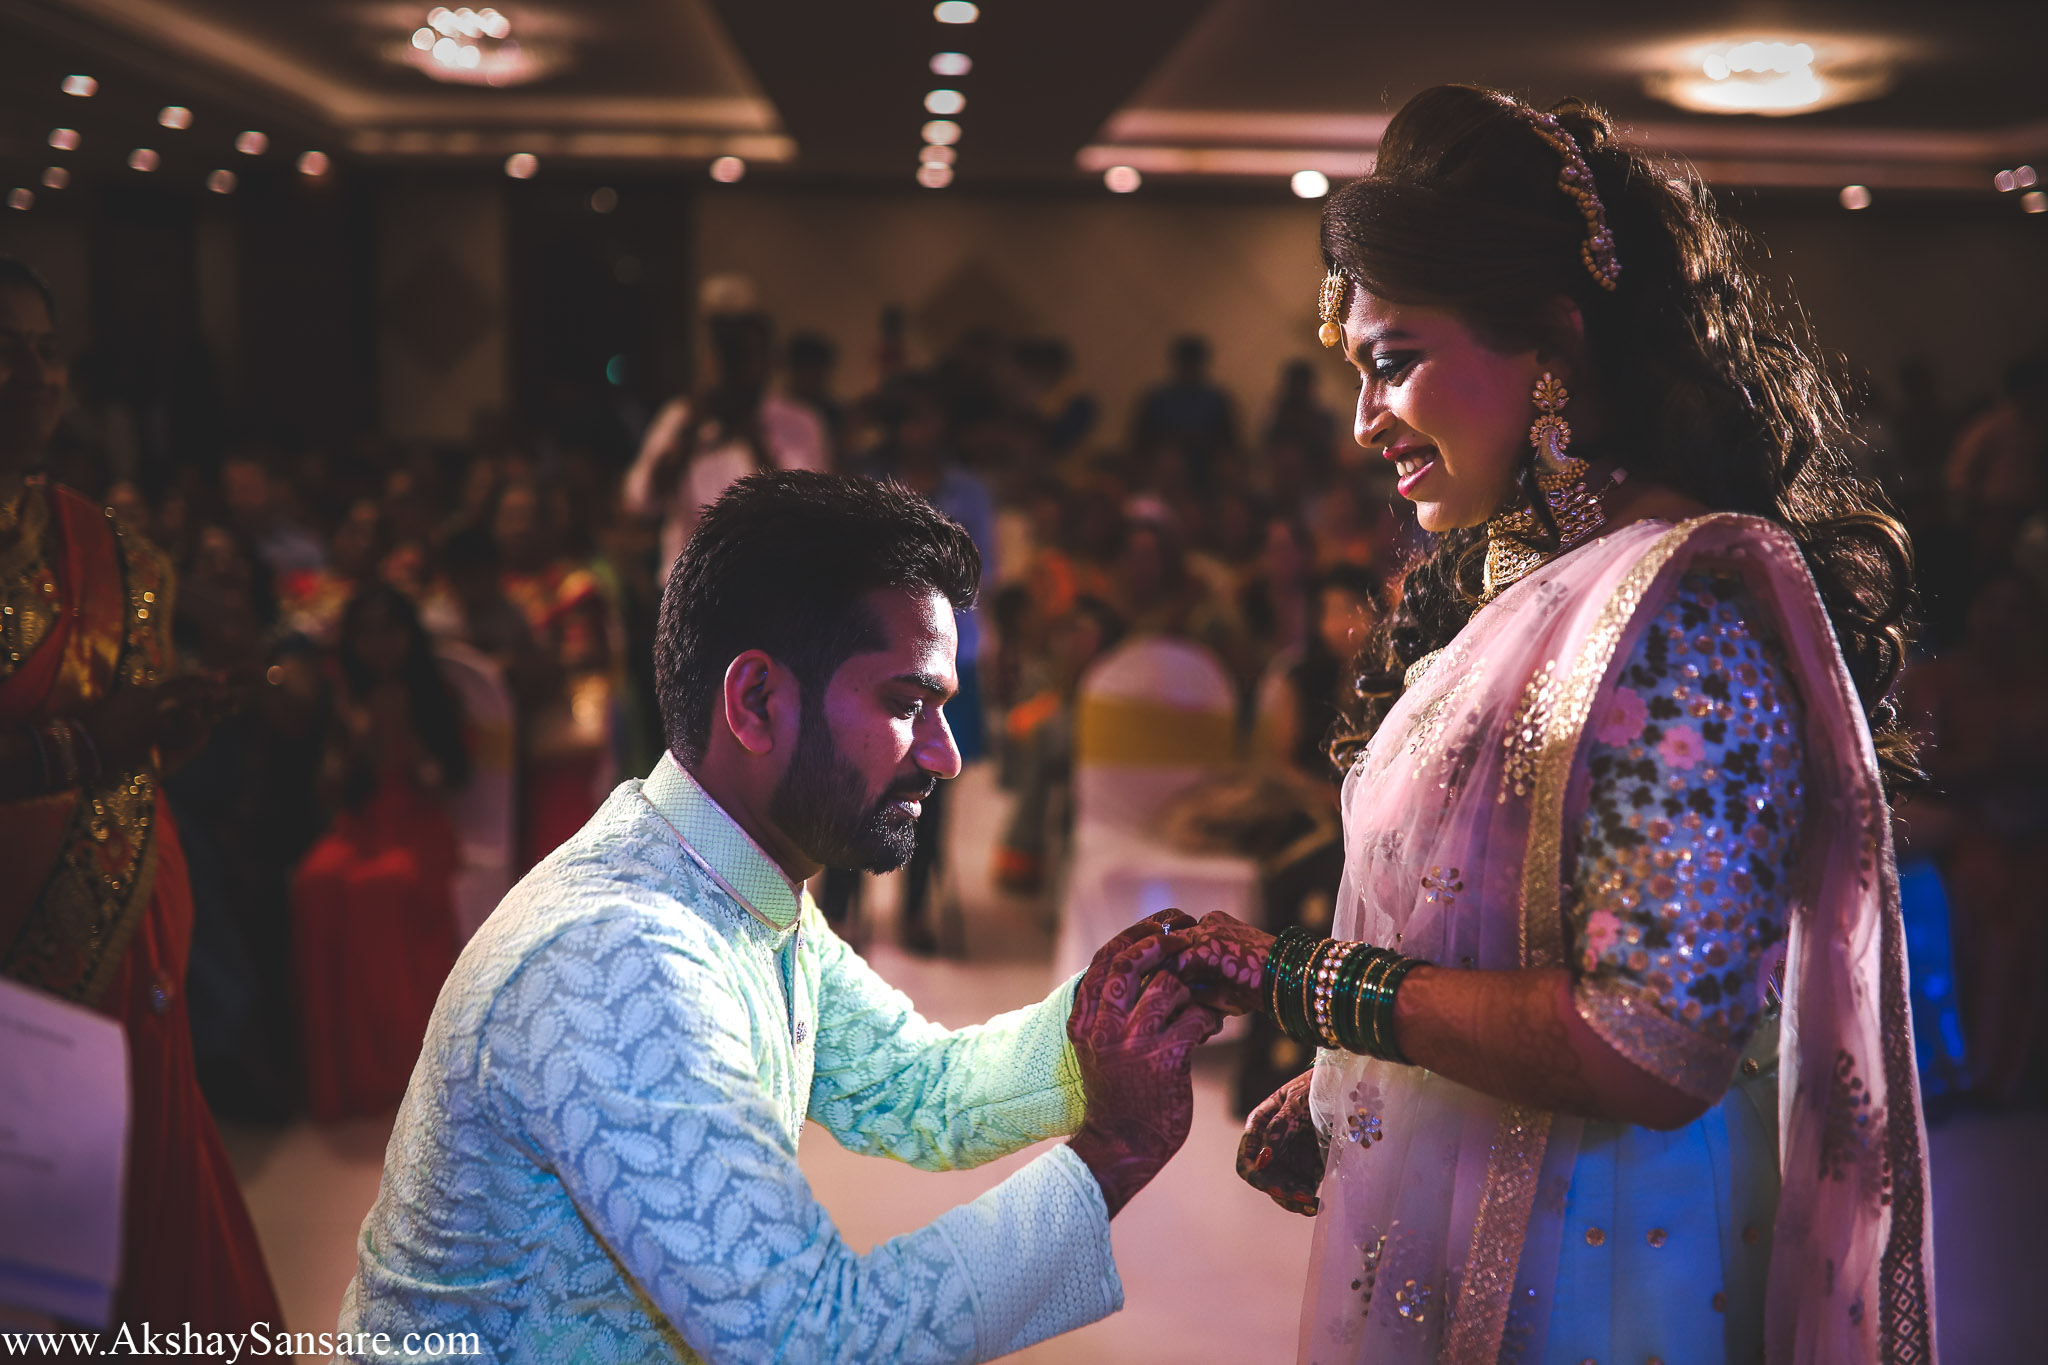 Ajay & Devika Akshay Sansare Photography Best Candid wedding photographer in mumbai india35.jpg